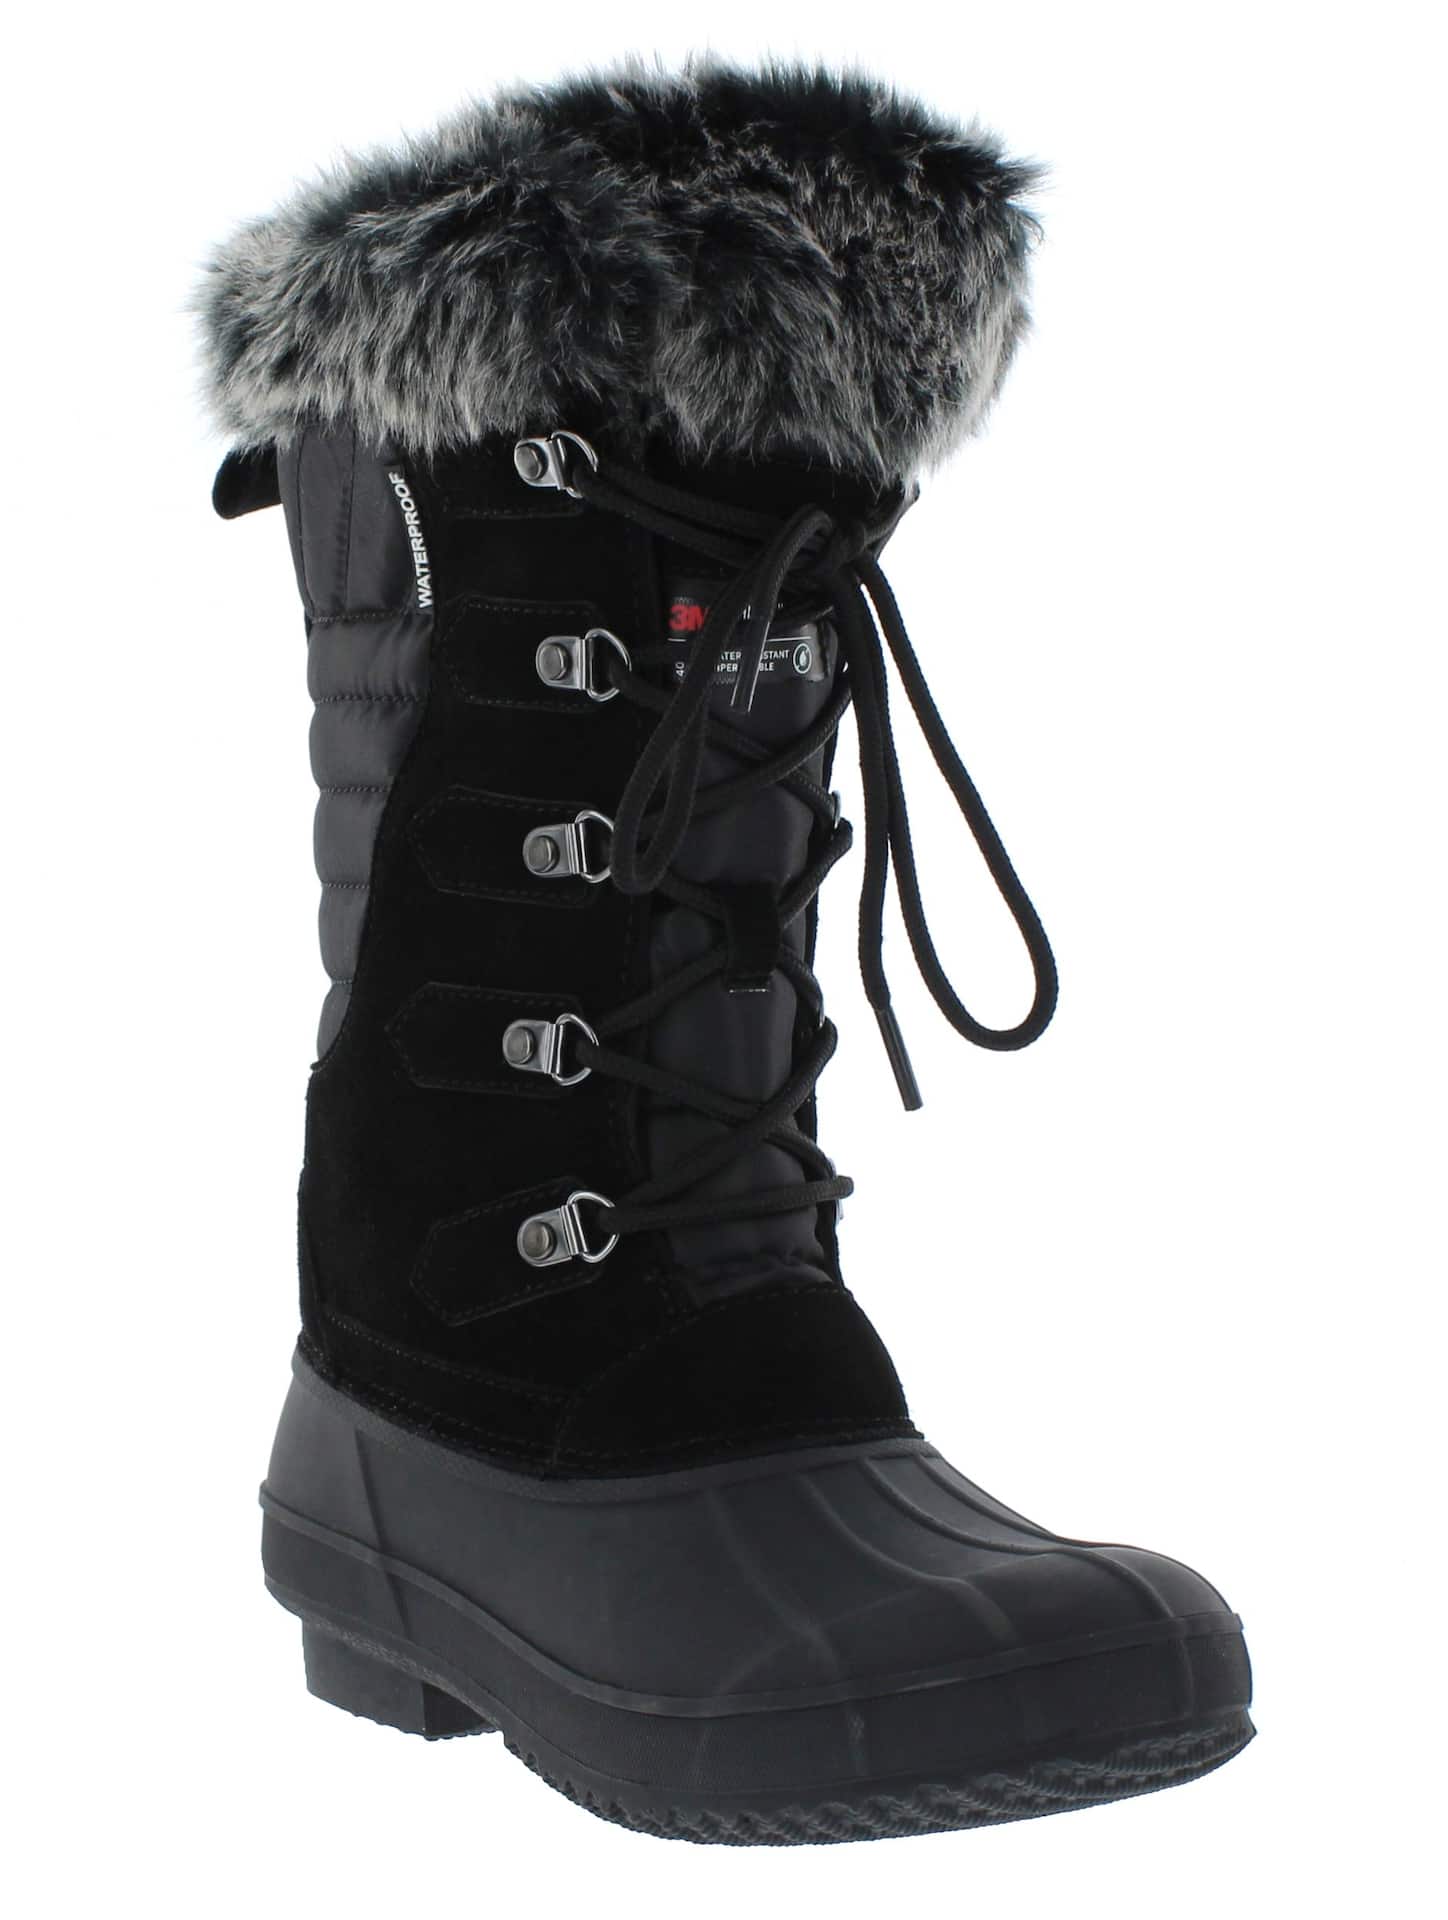 Winter Savings Clearance! Suokom Black Boots for Women, Plus Size Winter  New Woolen Yarn Snow Boots Back Strap Boots, Shoes Boots for Women Girls